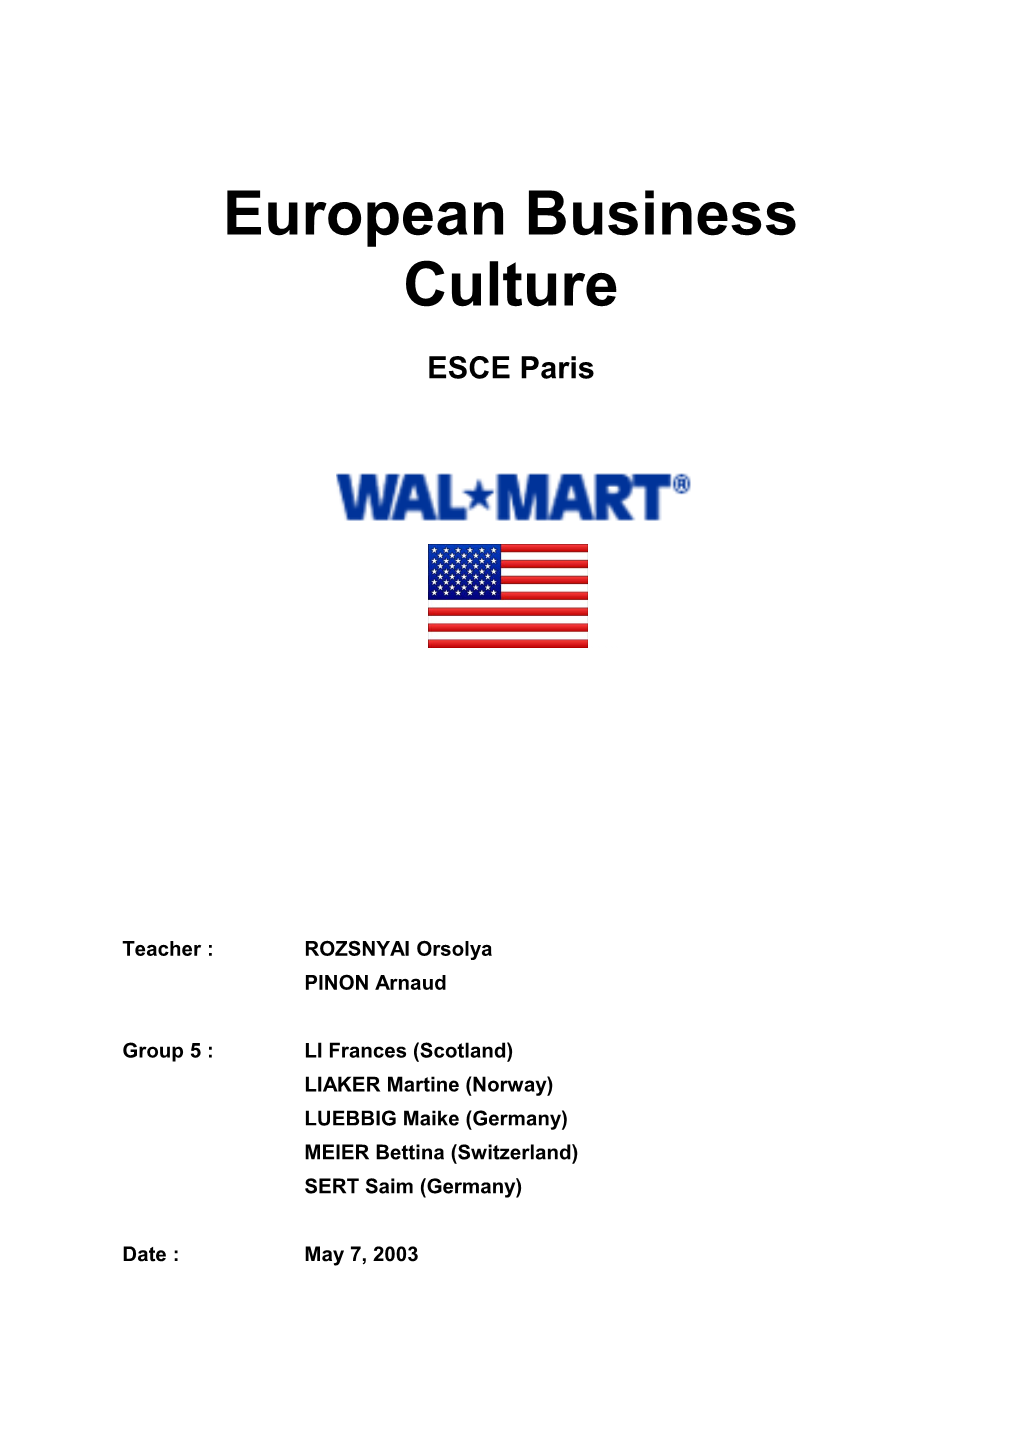 European Business Culture Group 5